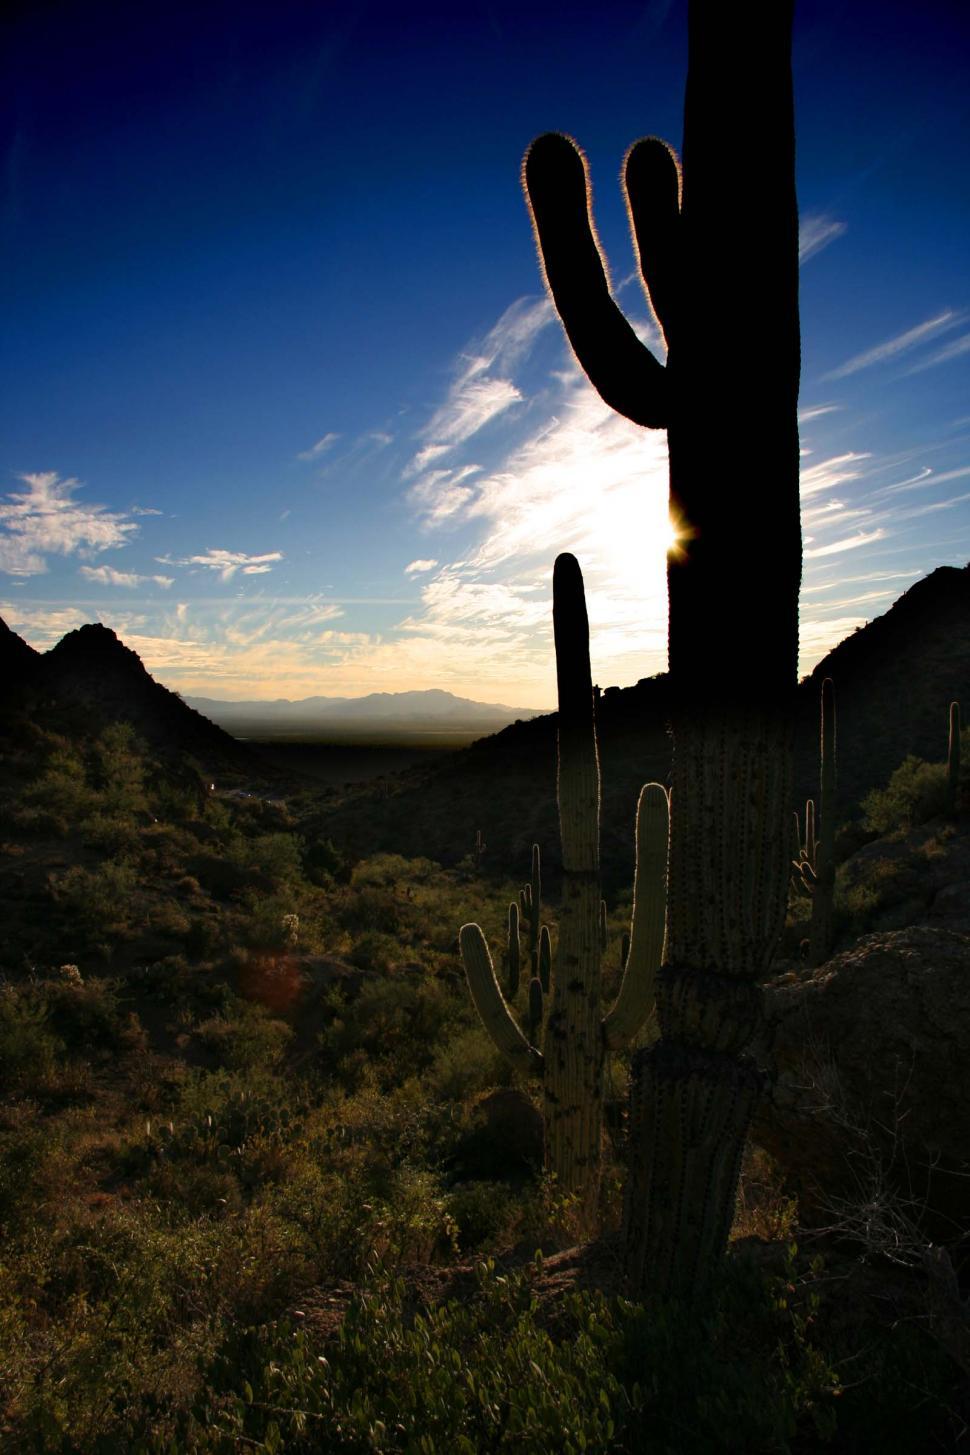 Free Image of sonoran desert tucson saguaro sahuaro cactus landscape dramatic sunset sky clouds silhouette backlight backlit valley mountains beautiful beauty rugged terrain 